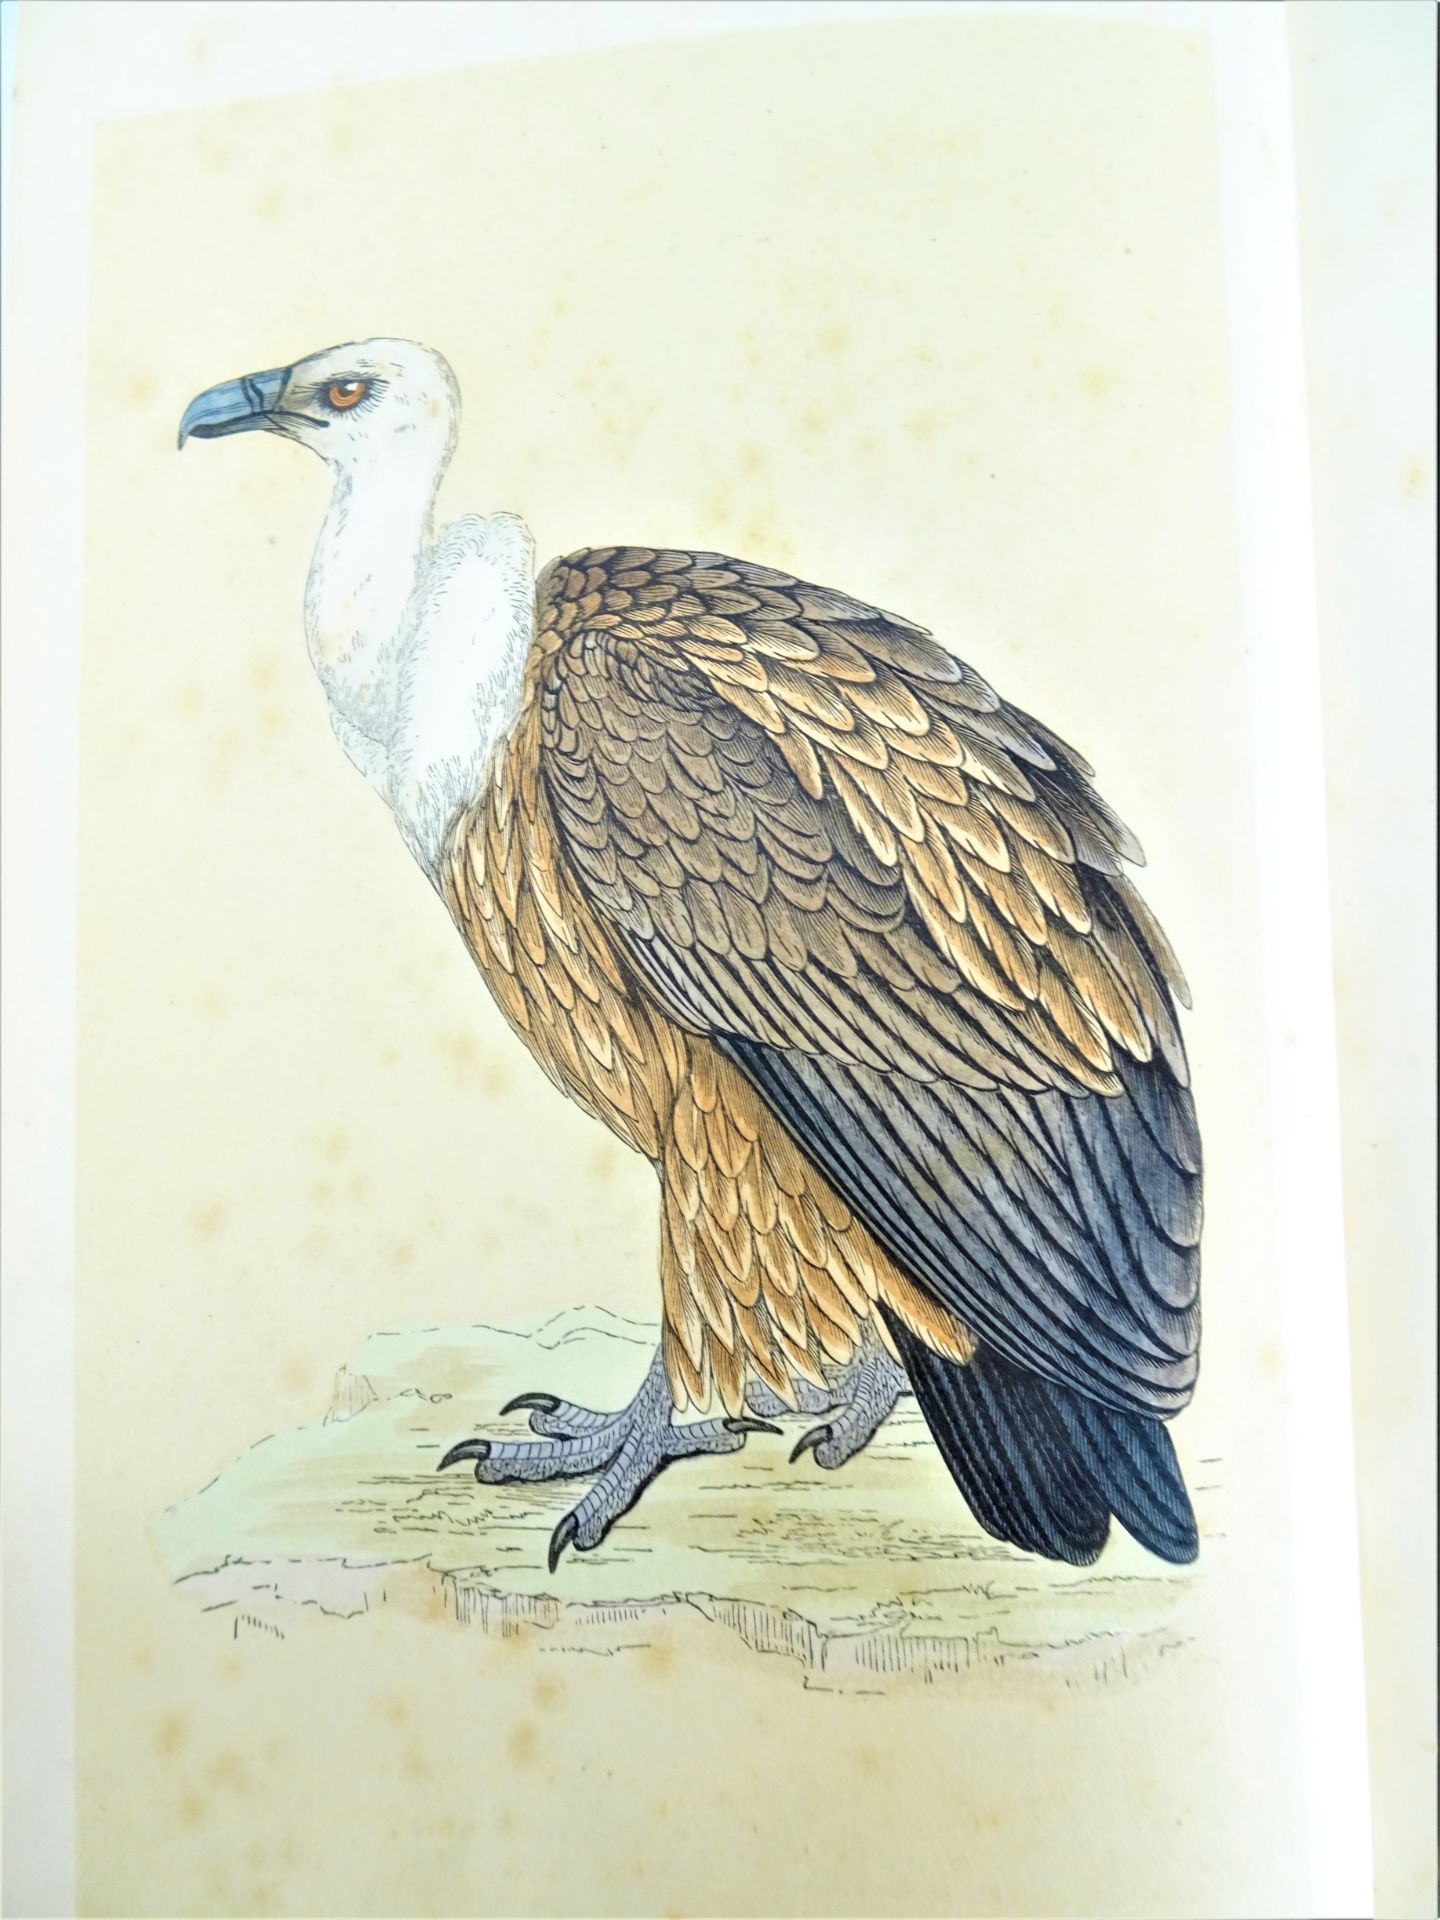 |Birds| Morris F.O., "A history of British birds", 1851-1857, first edition. London, Groombridge&